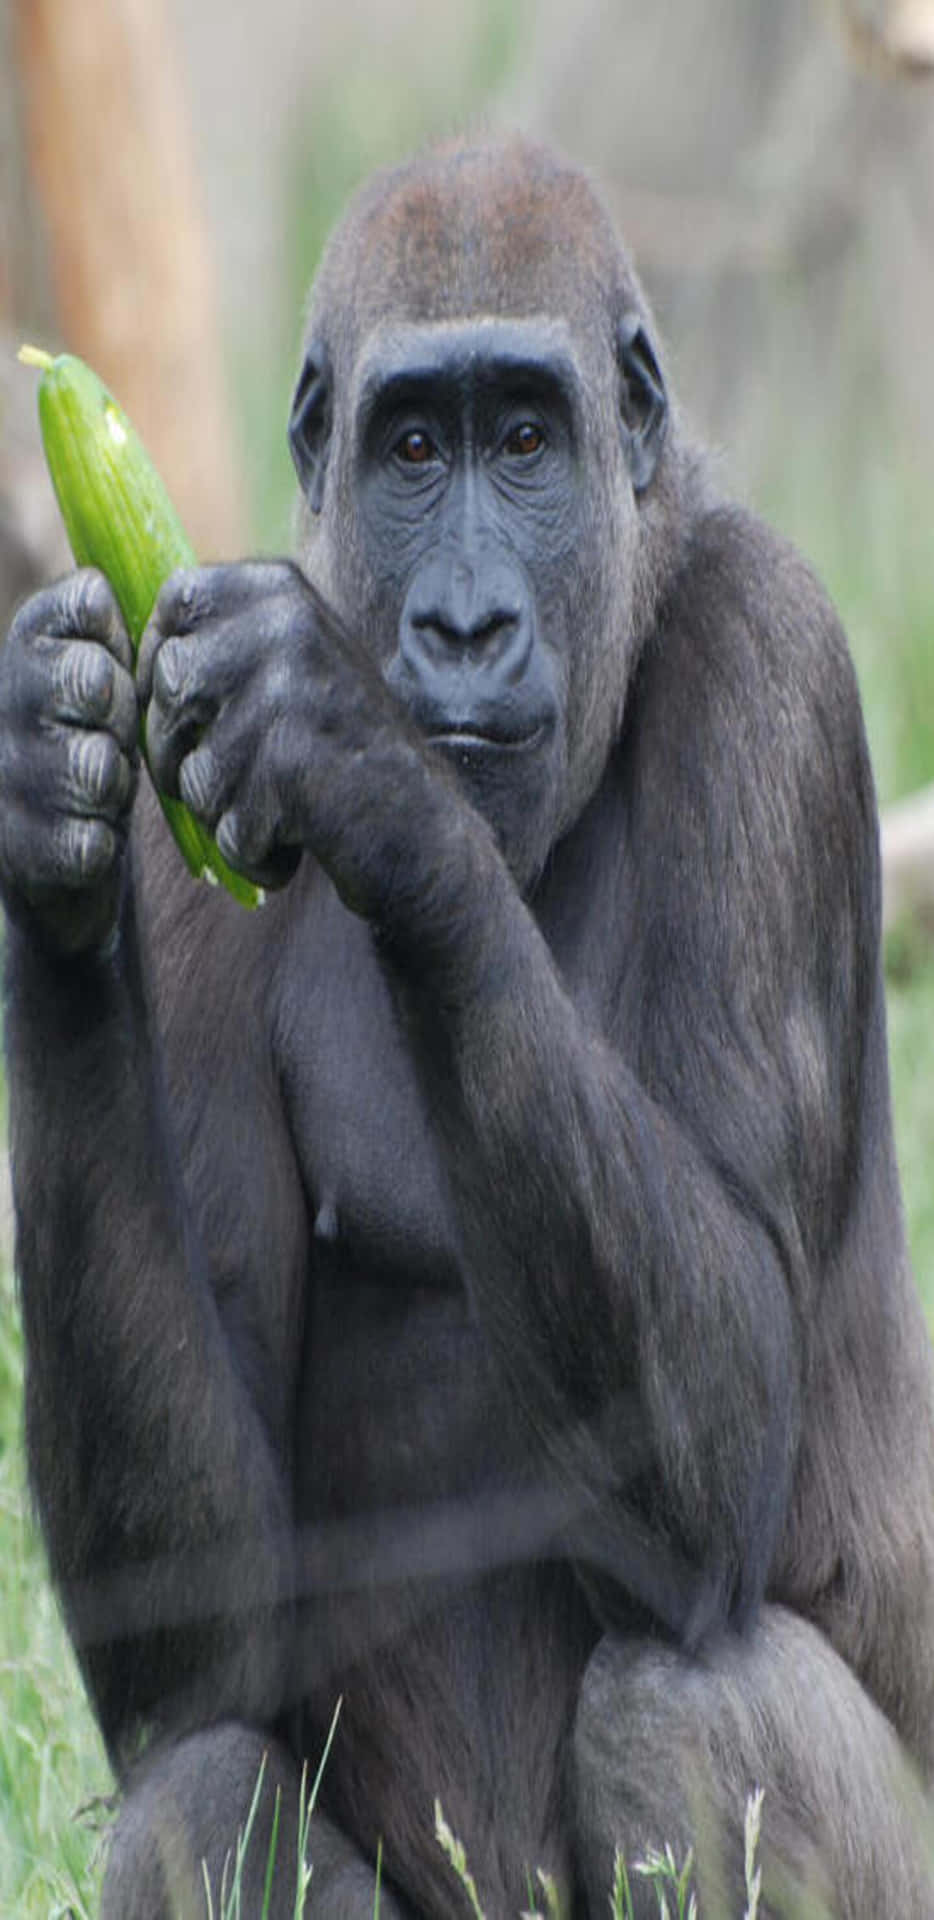 En gorilla spiser en agurk